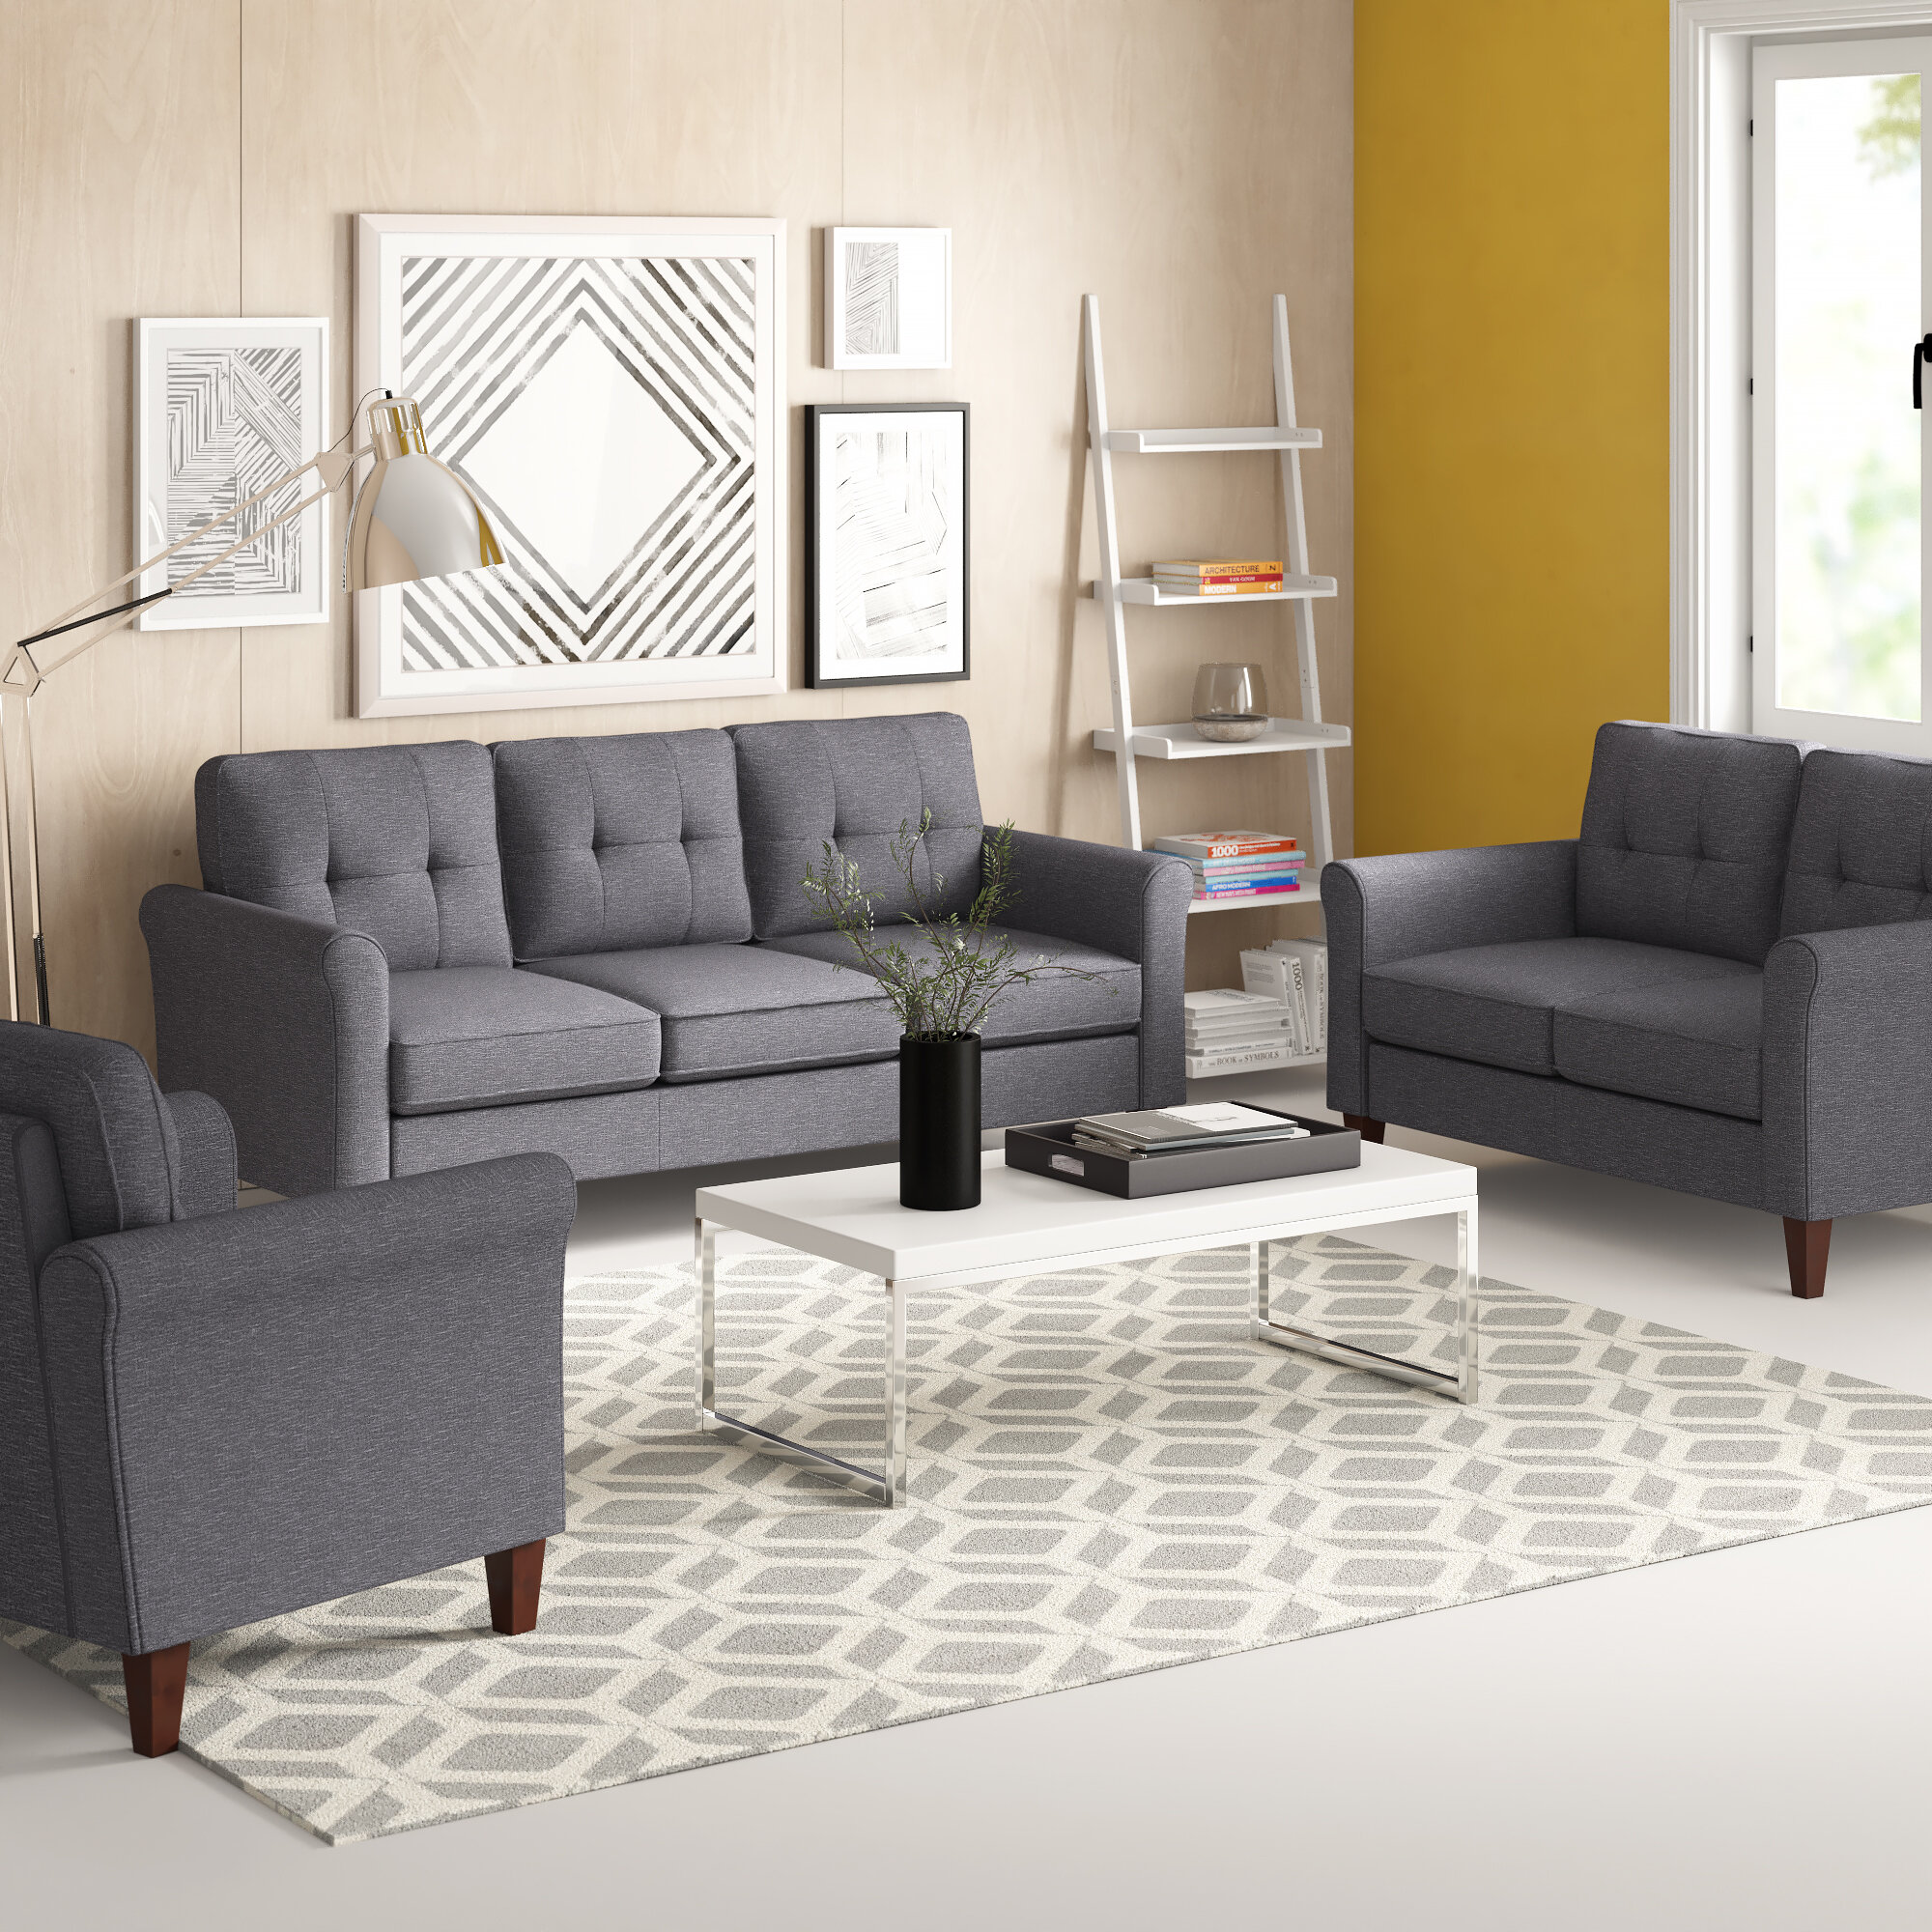 Zipcode Design Peru 3 Piece Living Room Set Reviews Wayfair